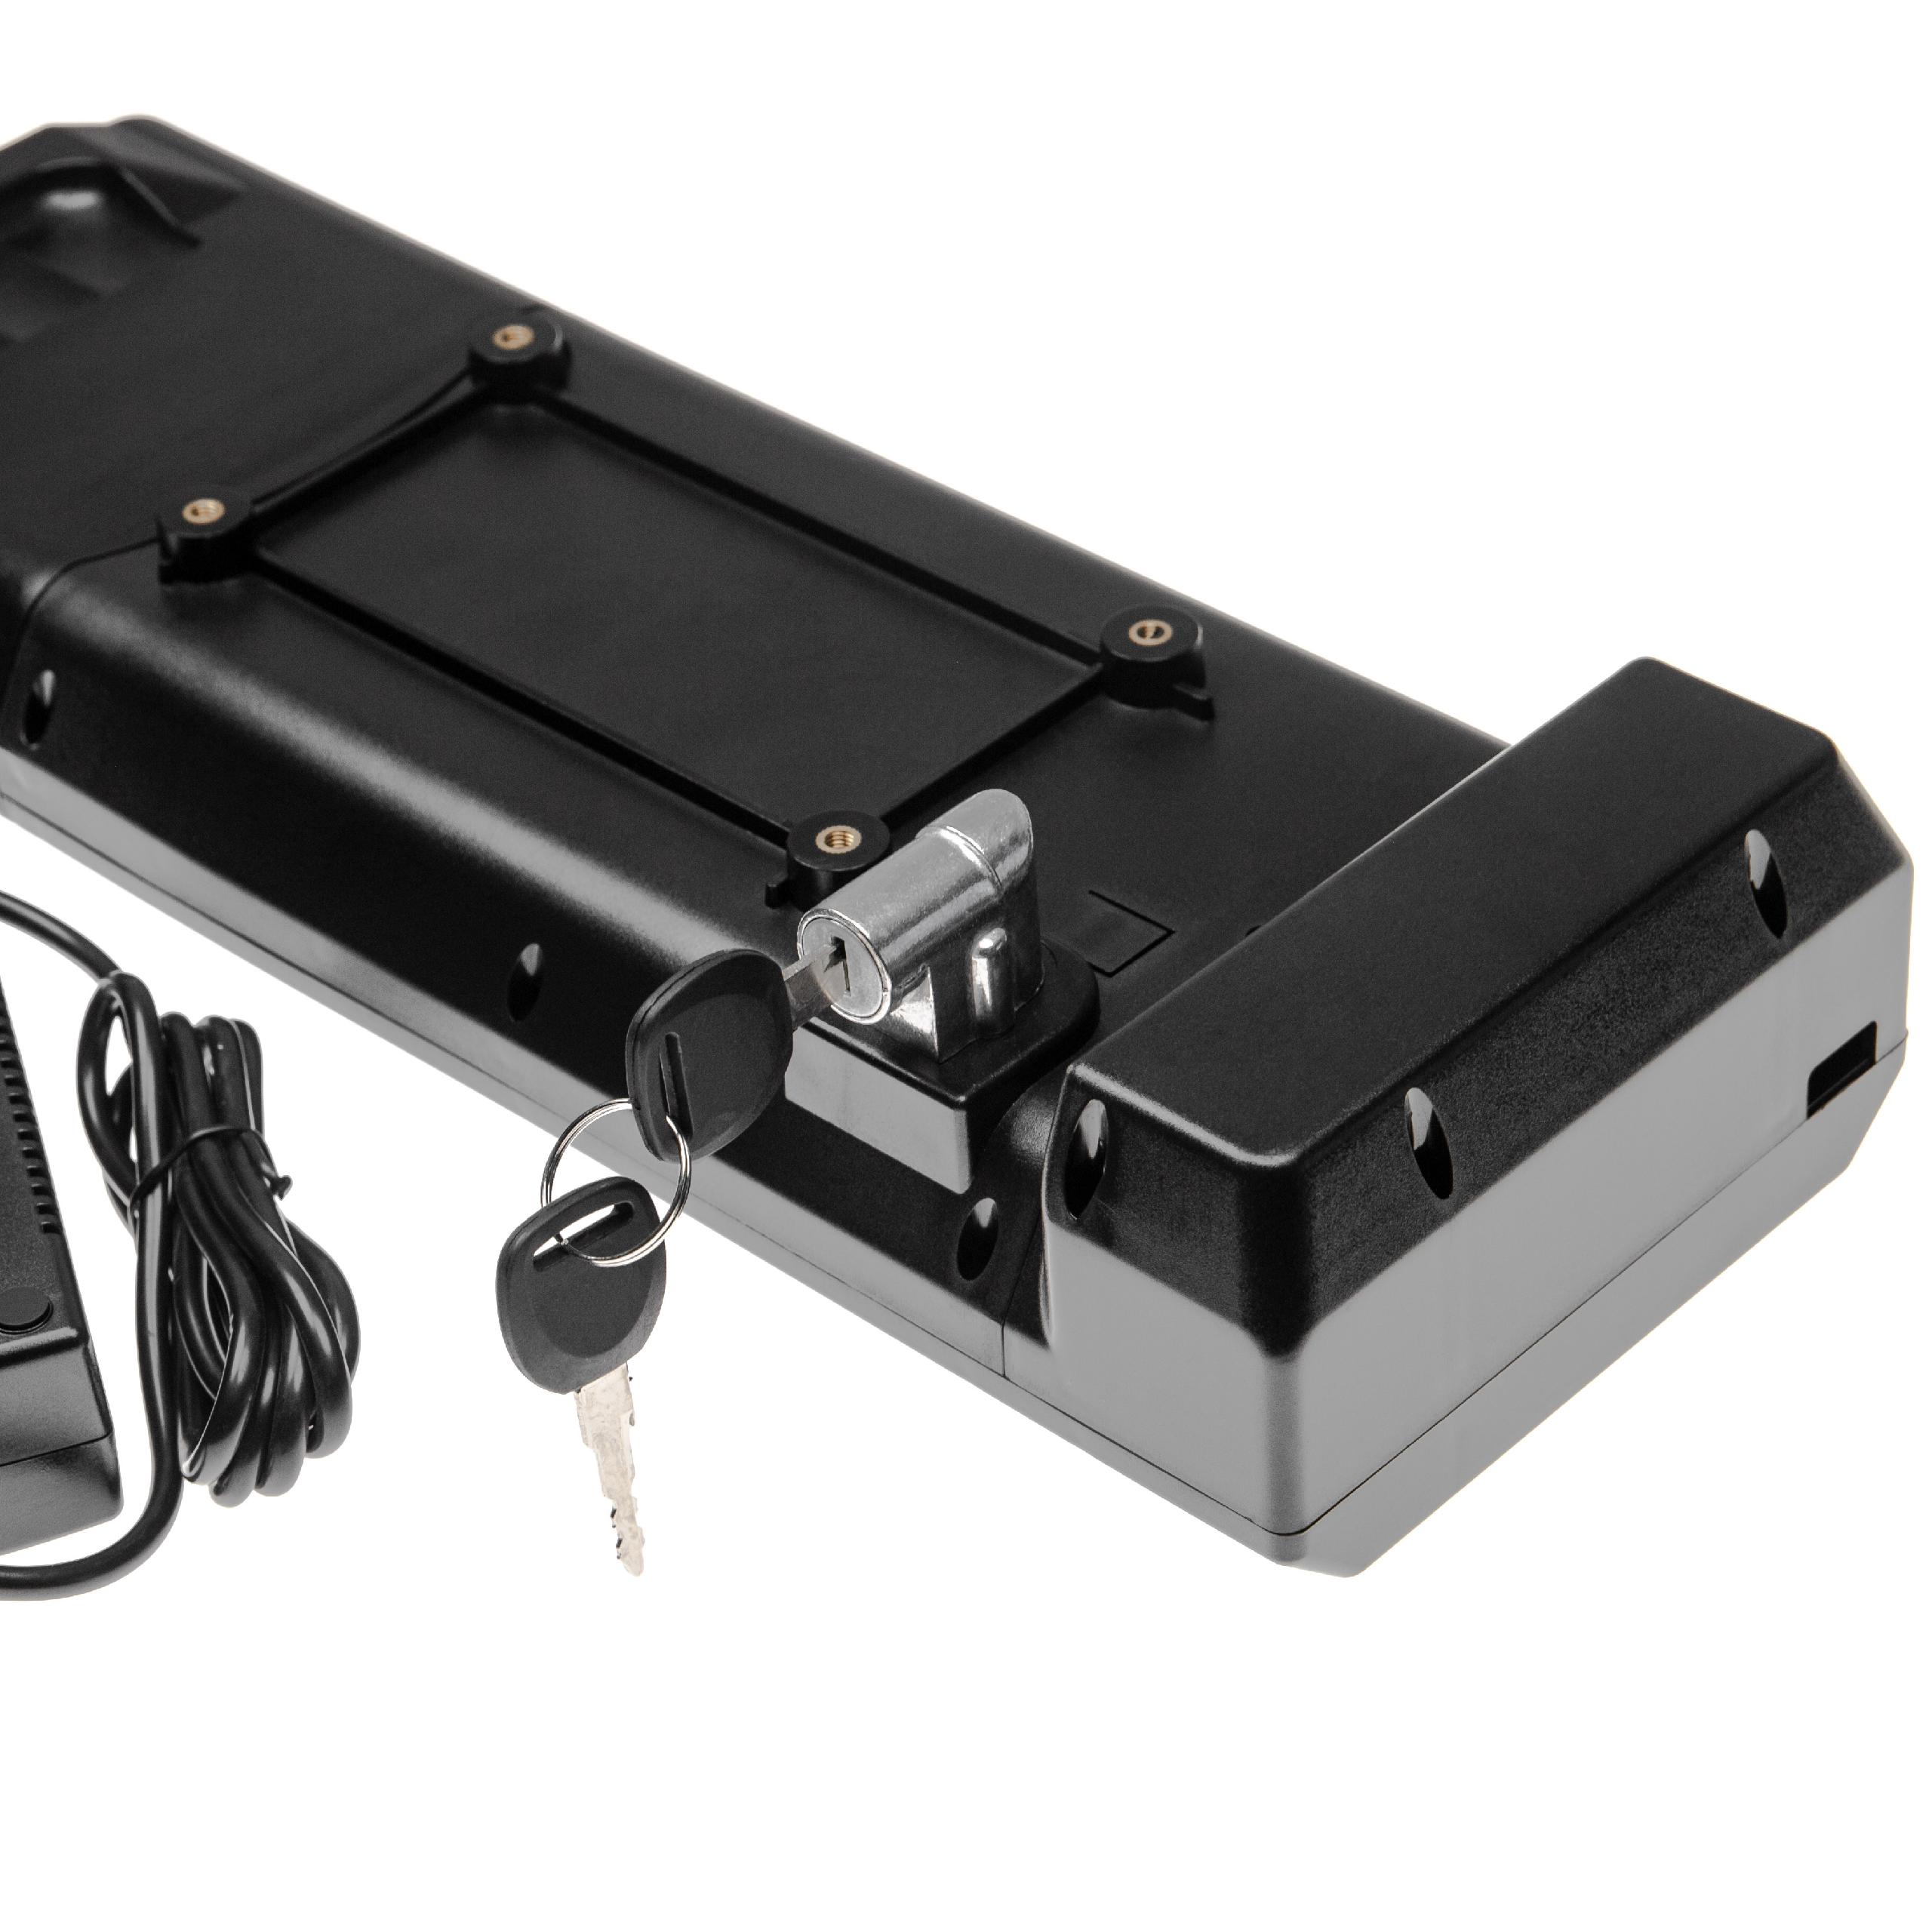 Akumulator bateria bagażnikowa do roweru elektrycznego - 8,8 Ah 36 V Li-Ion + ładowarka